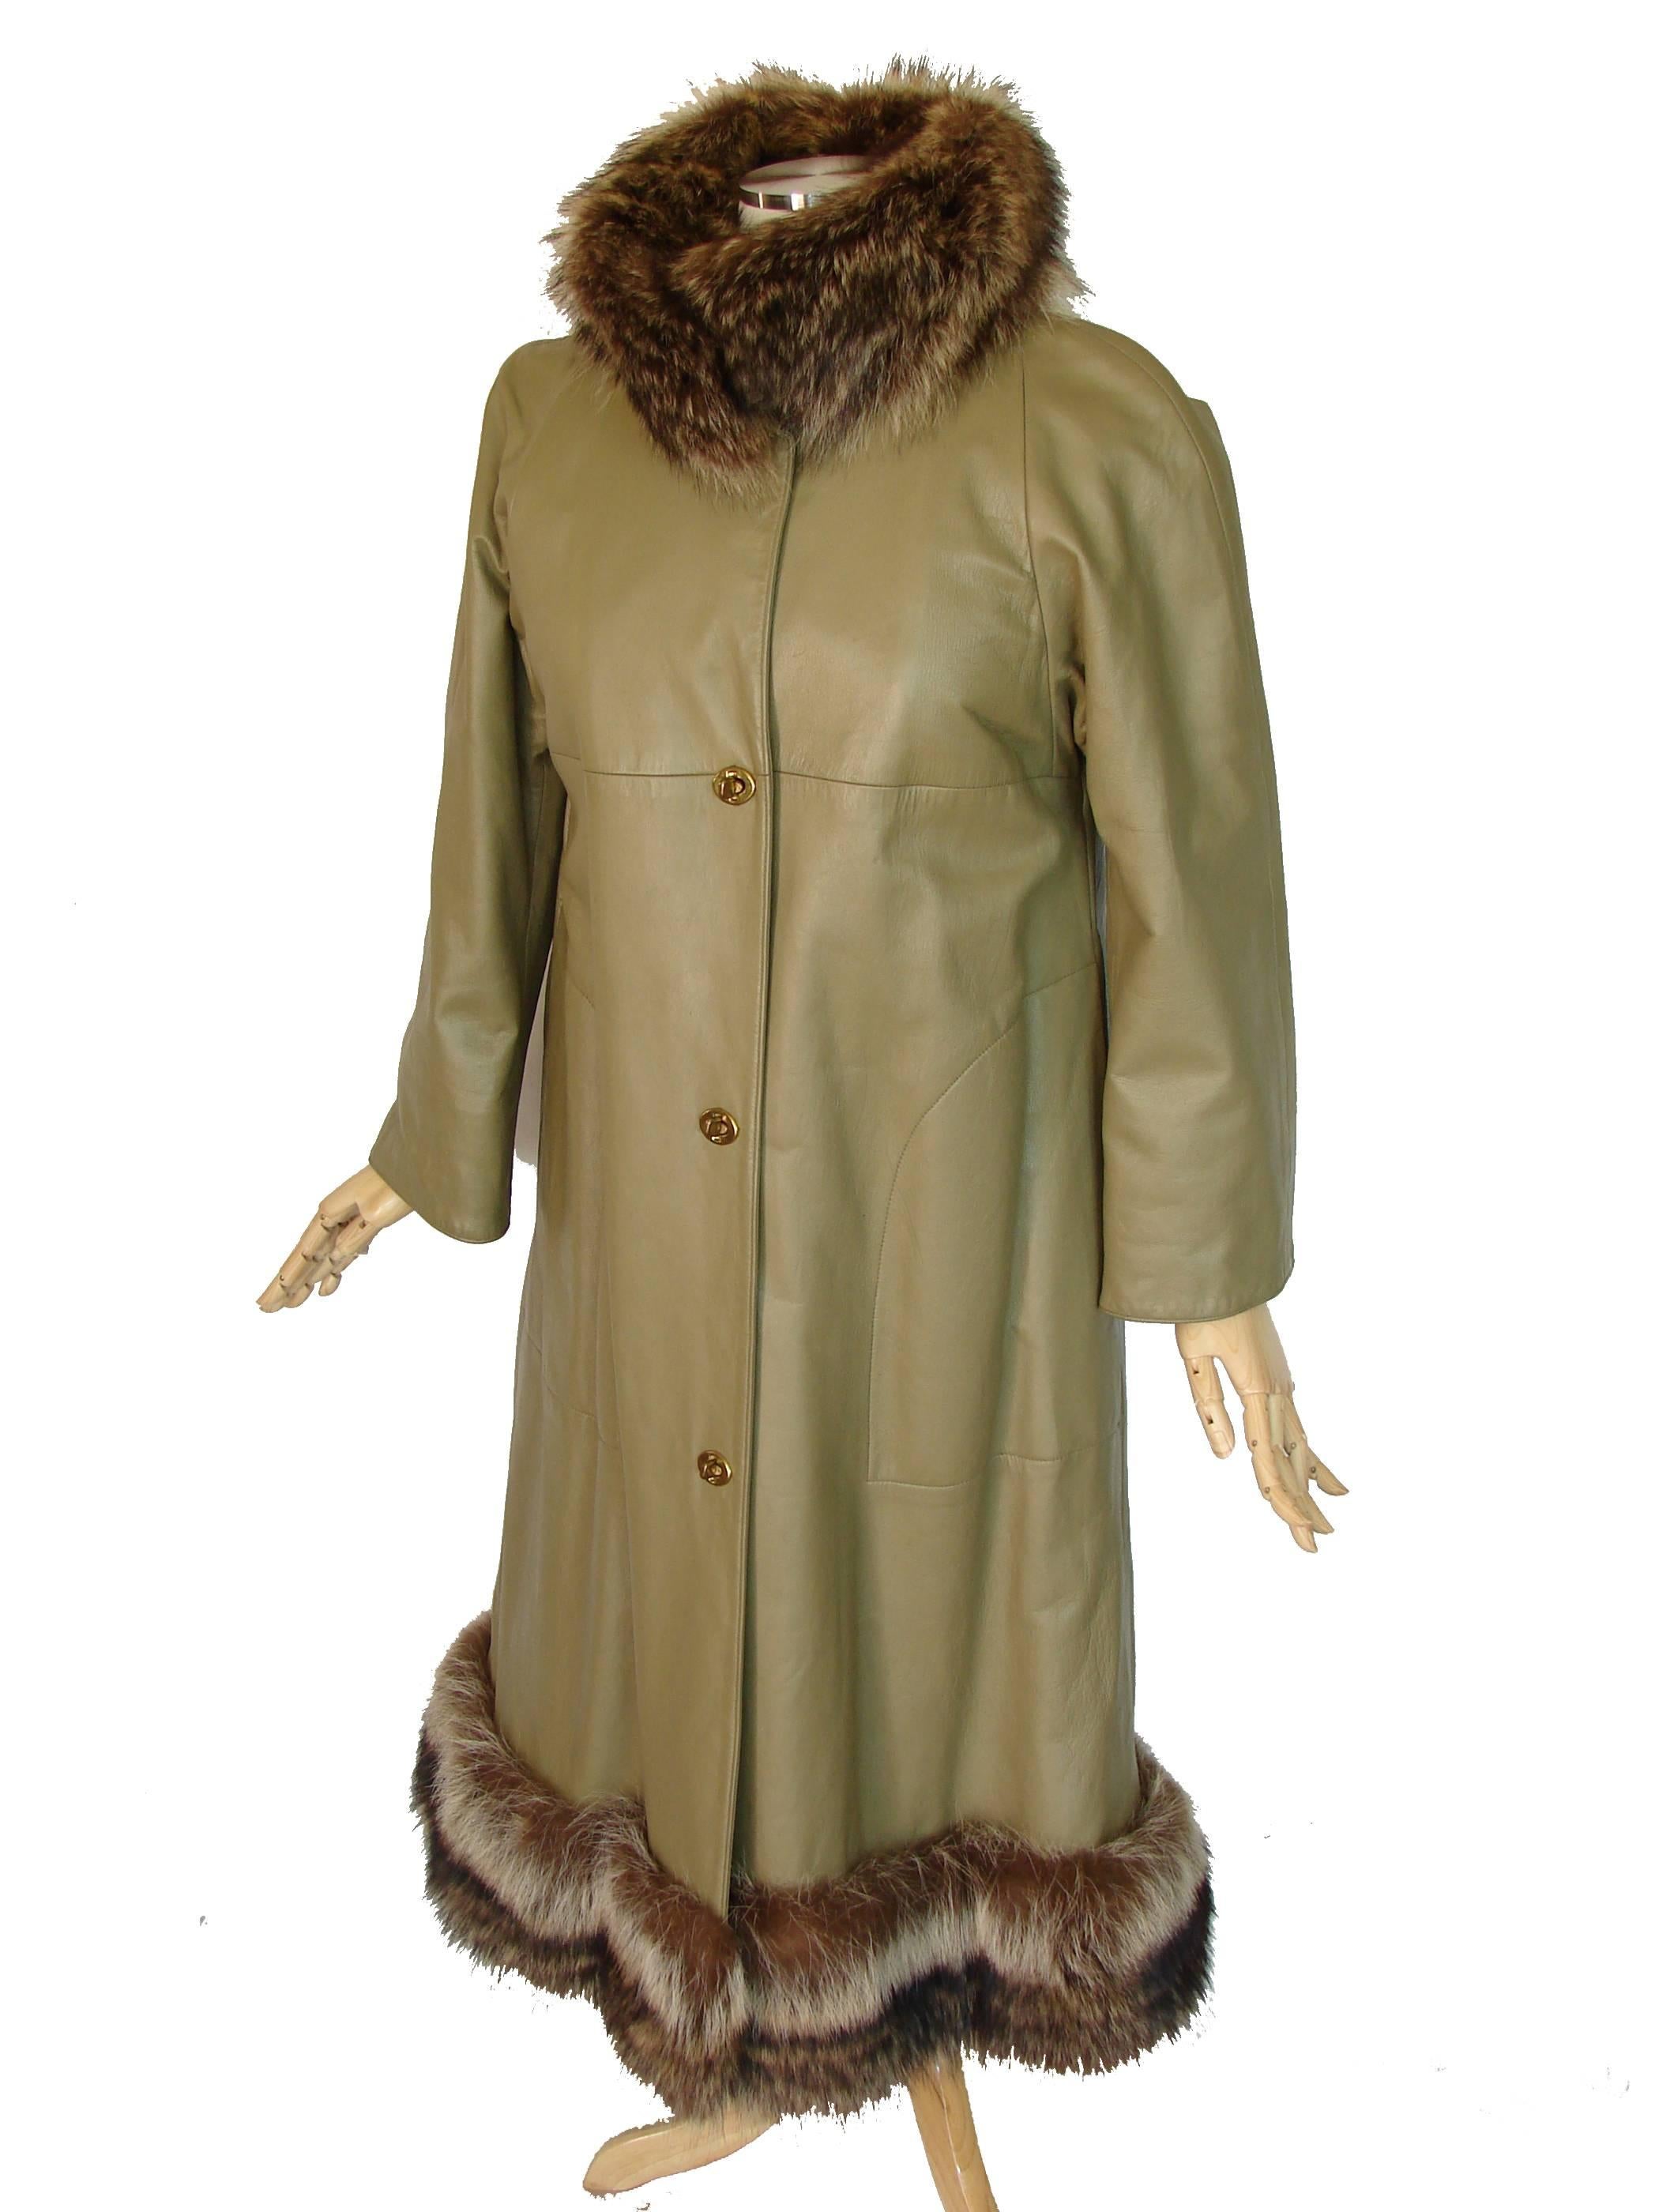 Bonnie Cashin for Sills Leather Swing Coat with Raccoon Fur Trim 1960s Sz M 2